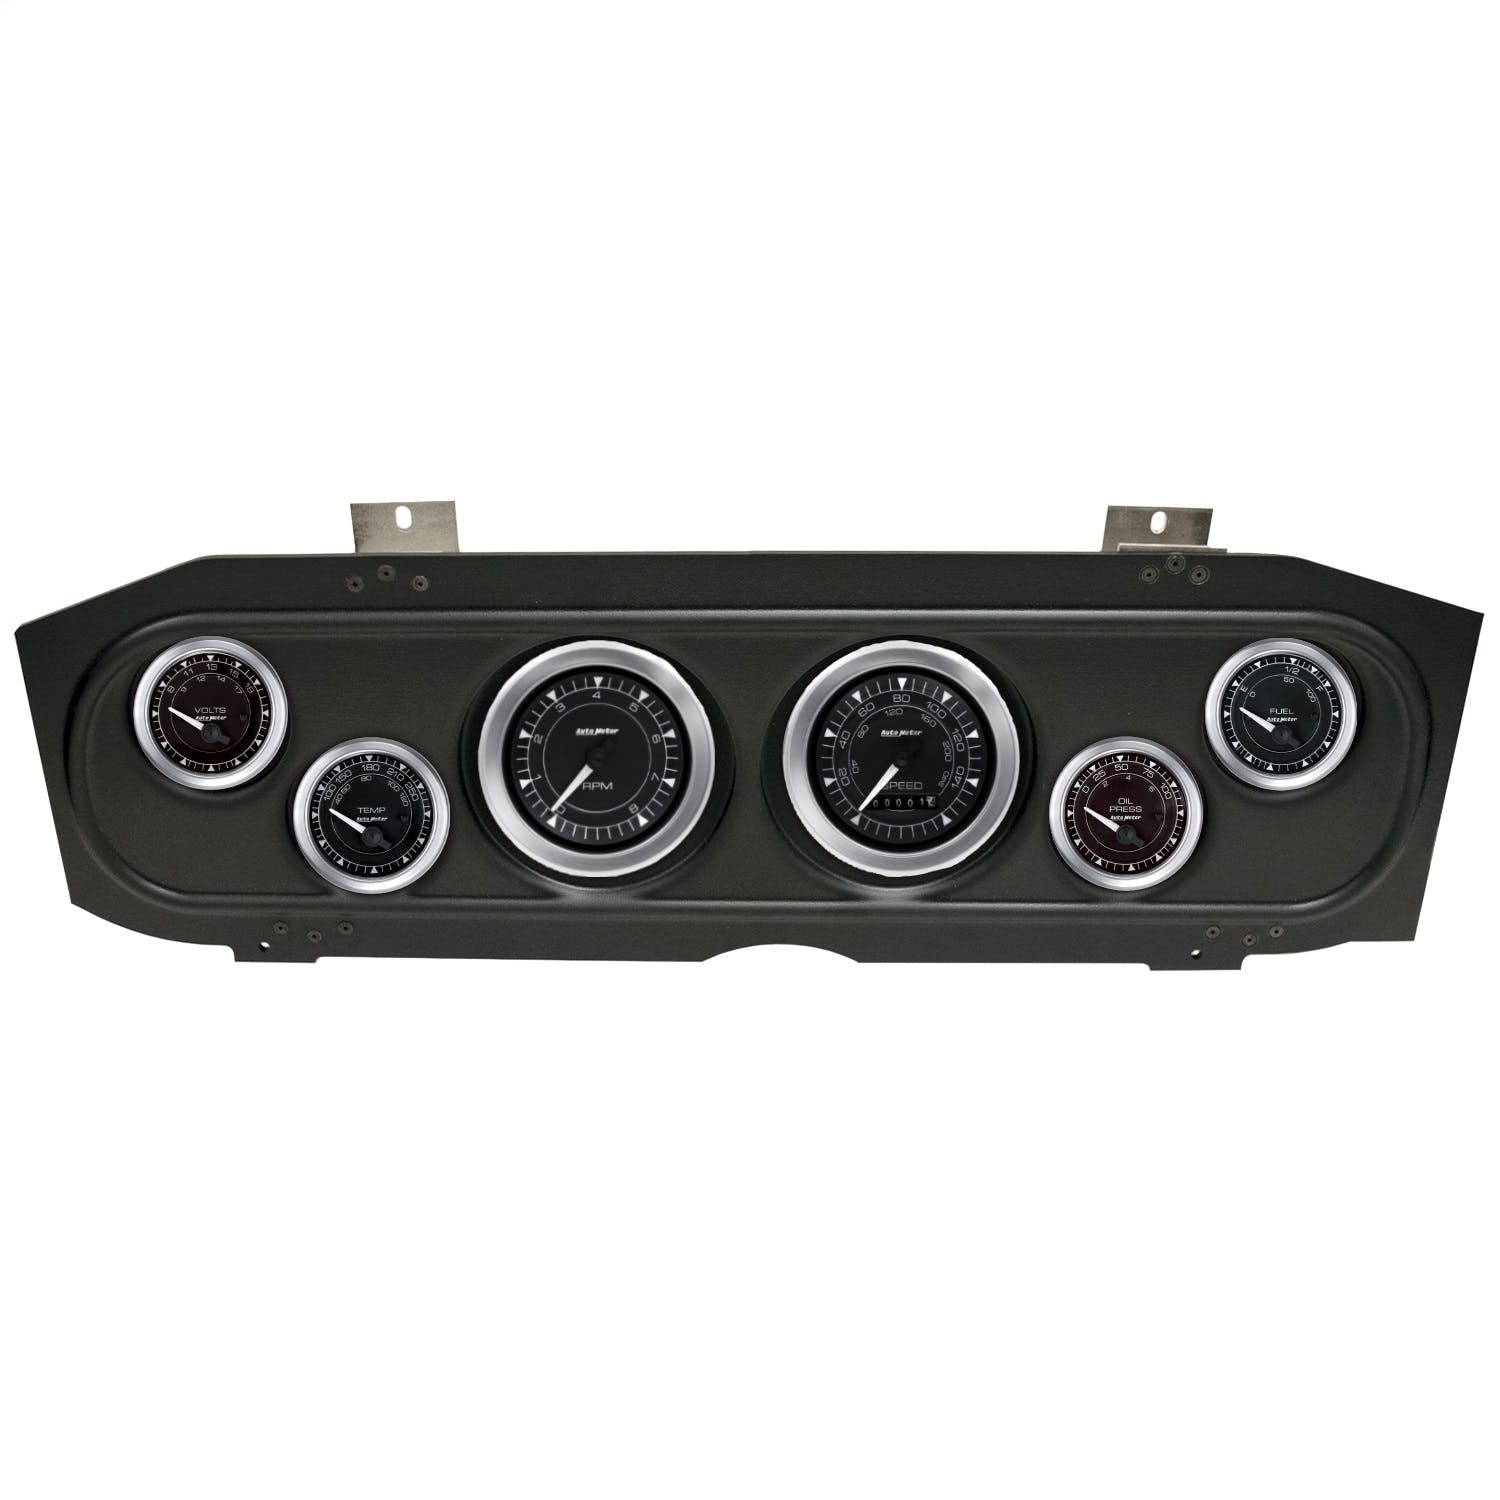 AutoMeter Products 2913-04 6 Gauge Direct-Fit Dash Kit, Mercury Cougar 69-70, Chrono